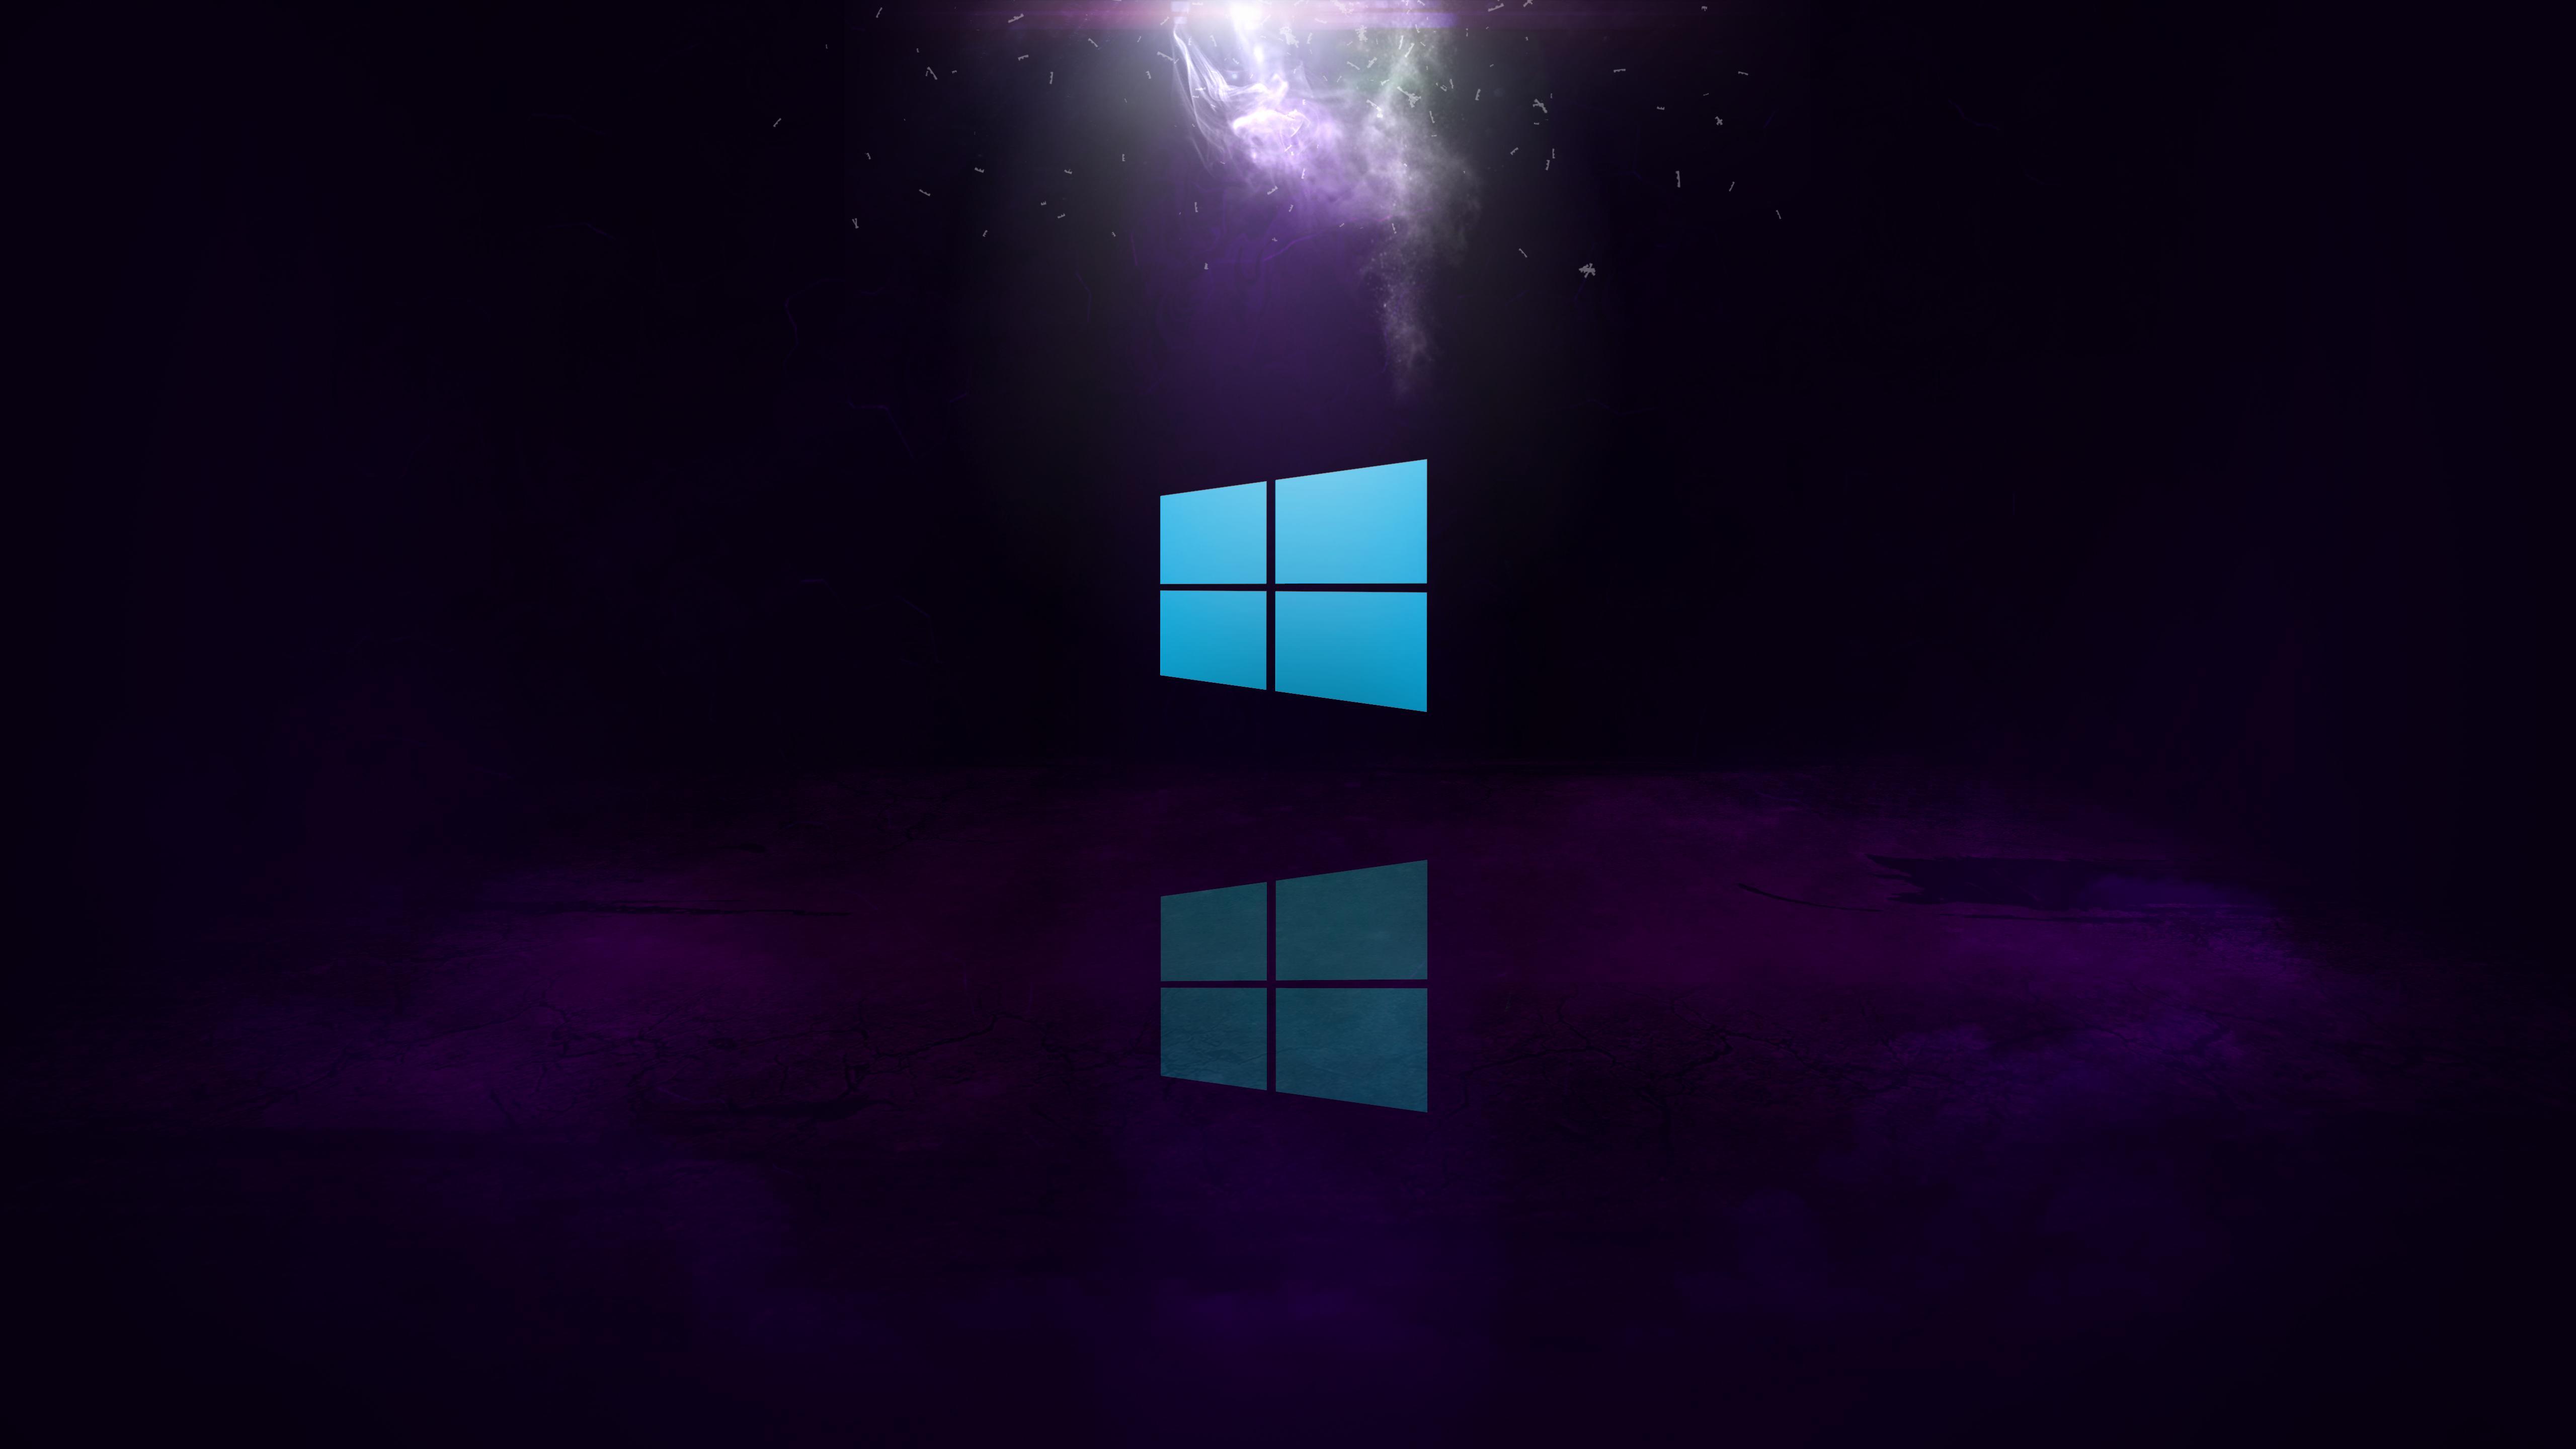 Windows 10 5k, HD Computer, 4k Wallpapers, Image, Backgrounds